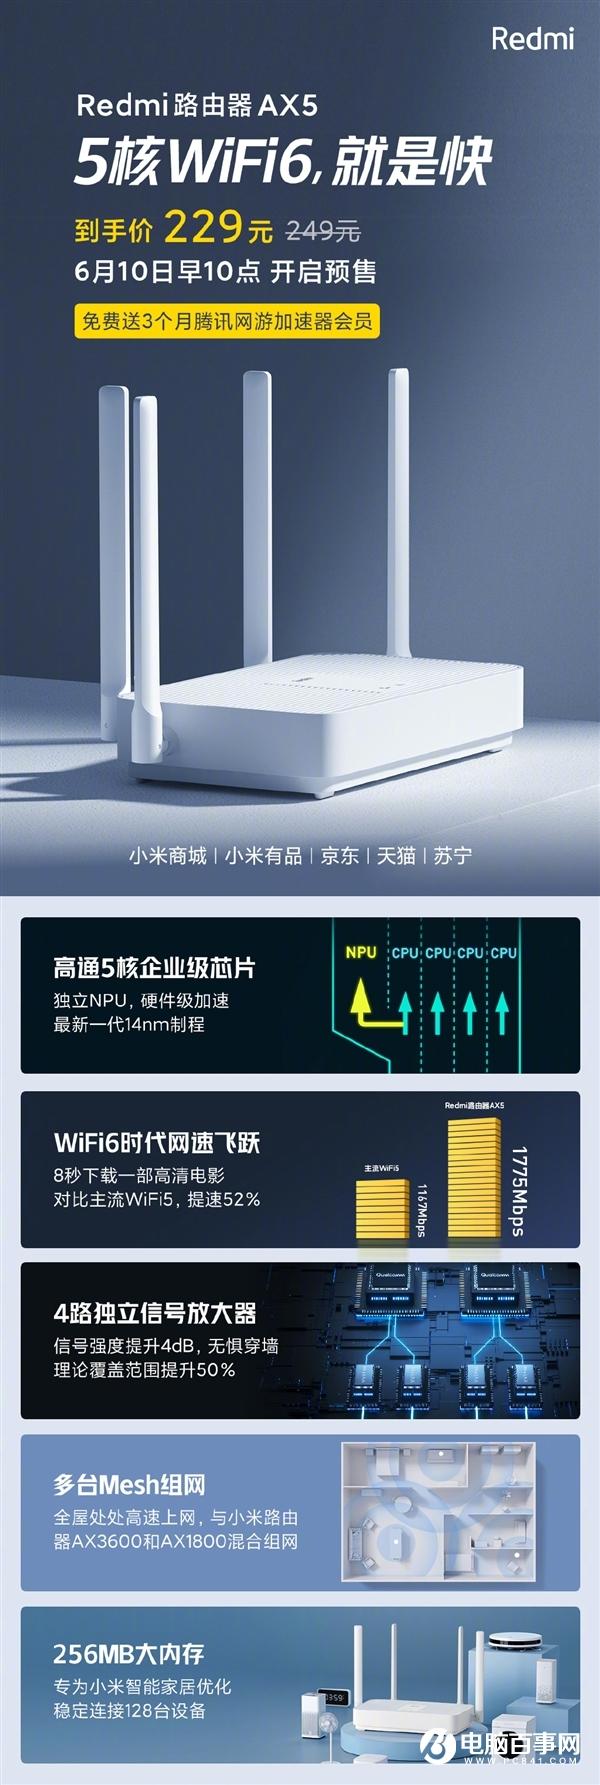 Redmi首款WiFi 6路由器AX5预售：229元